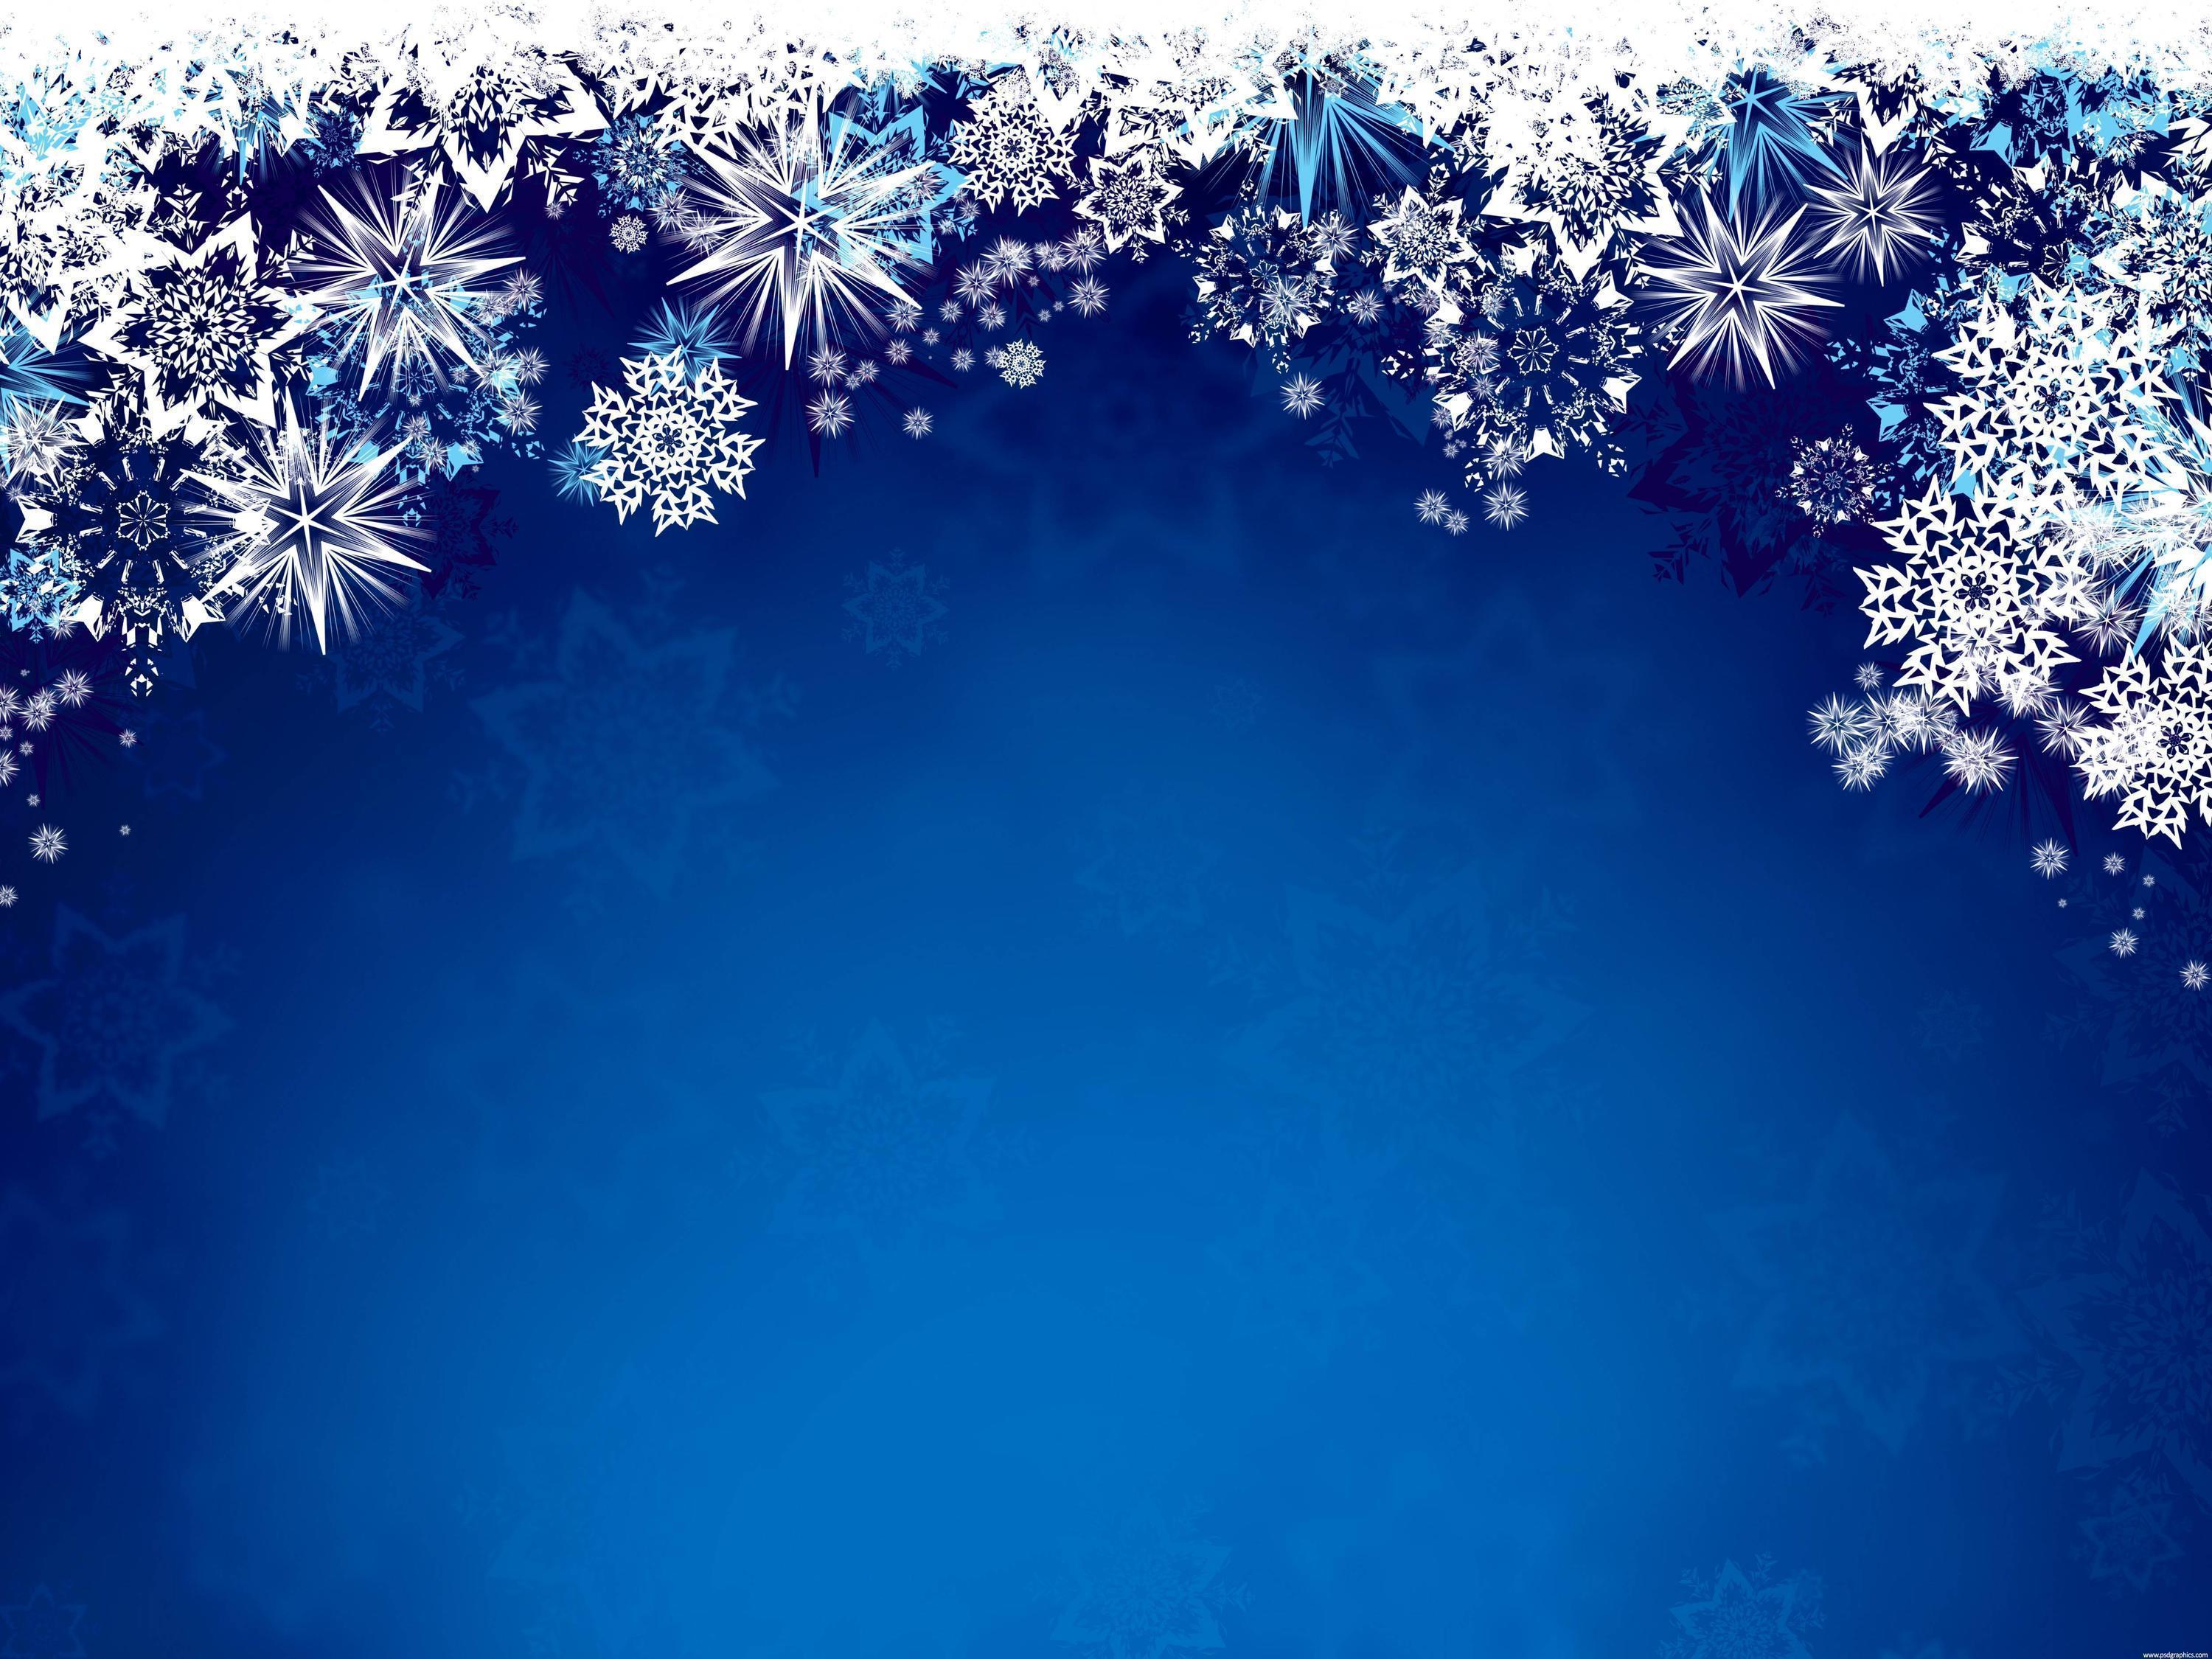 Blue snowflakes background